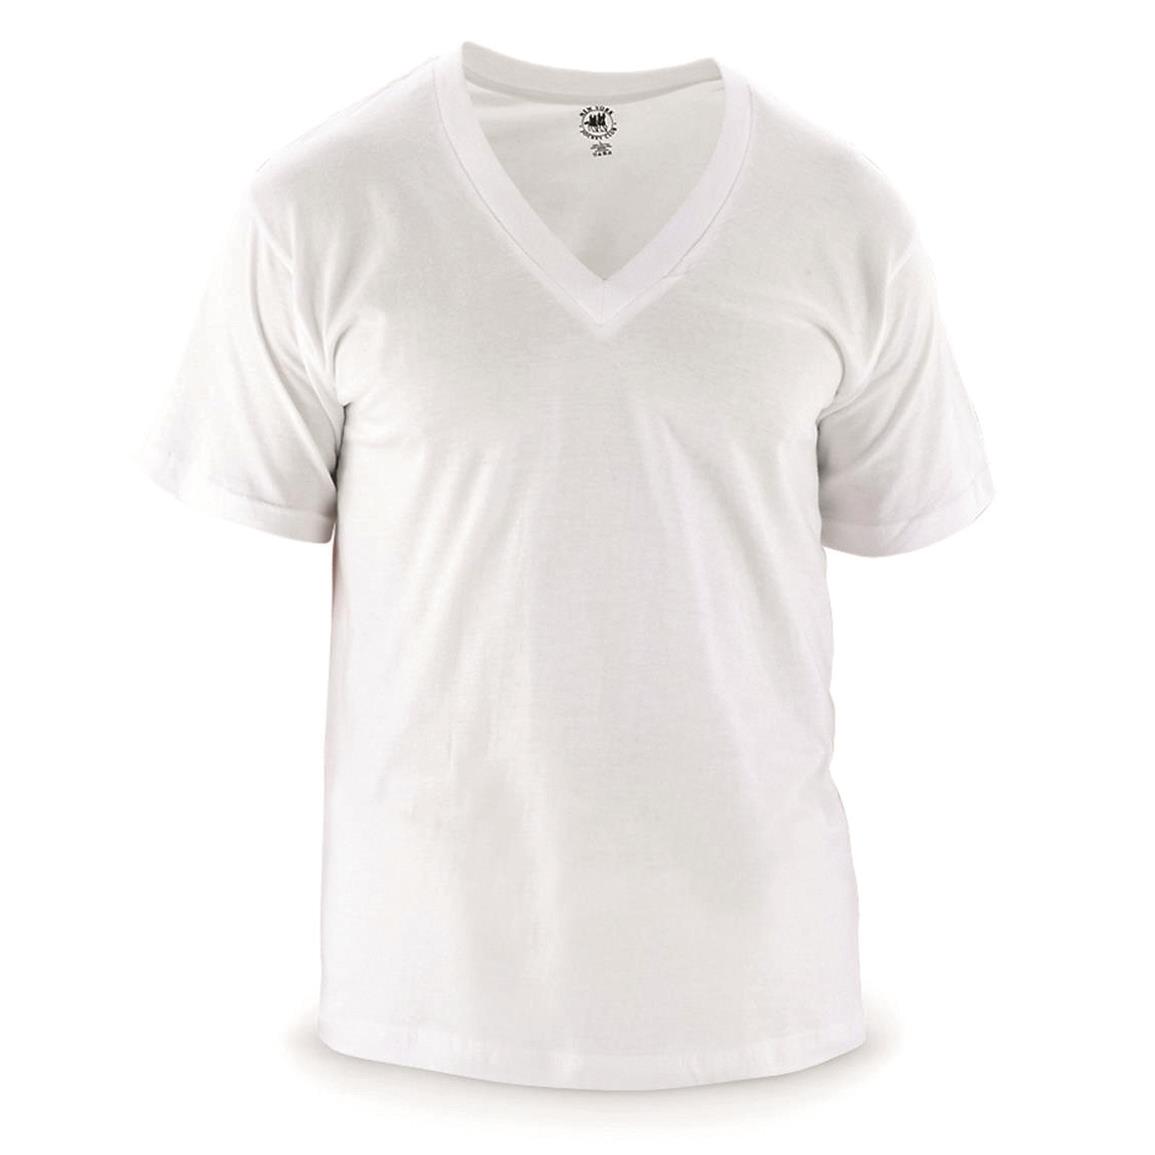 U.S. Military Surplus V-Neck Short Sleeve Undershirts, 3 Pack, New, White